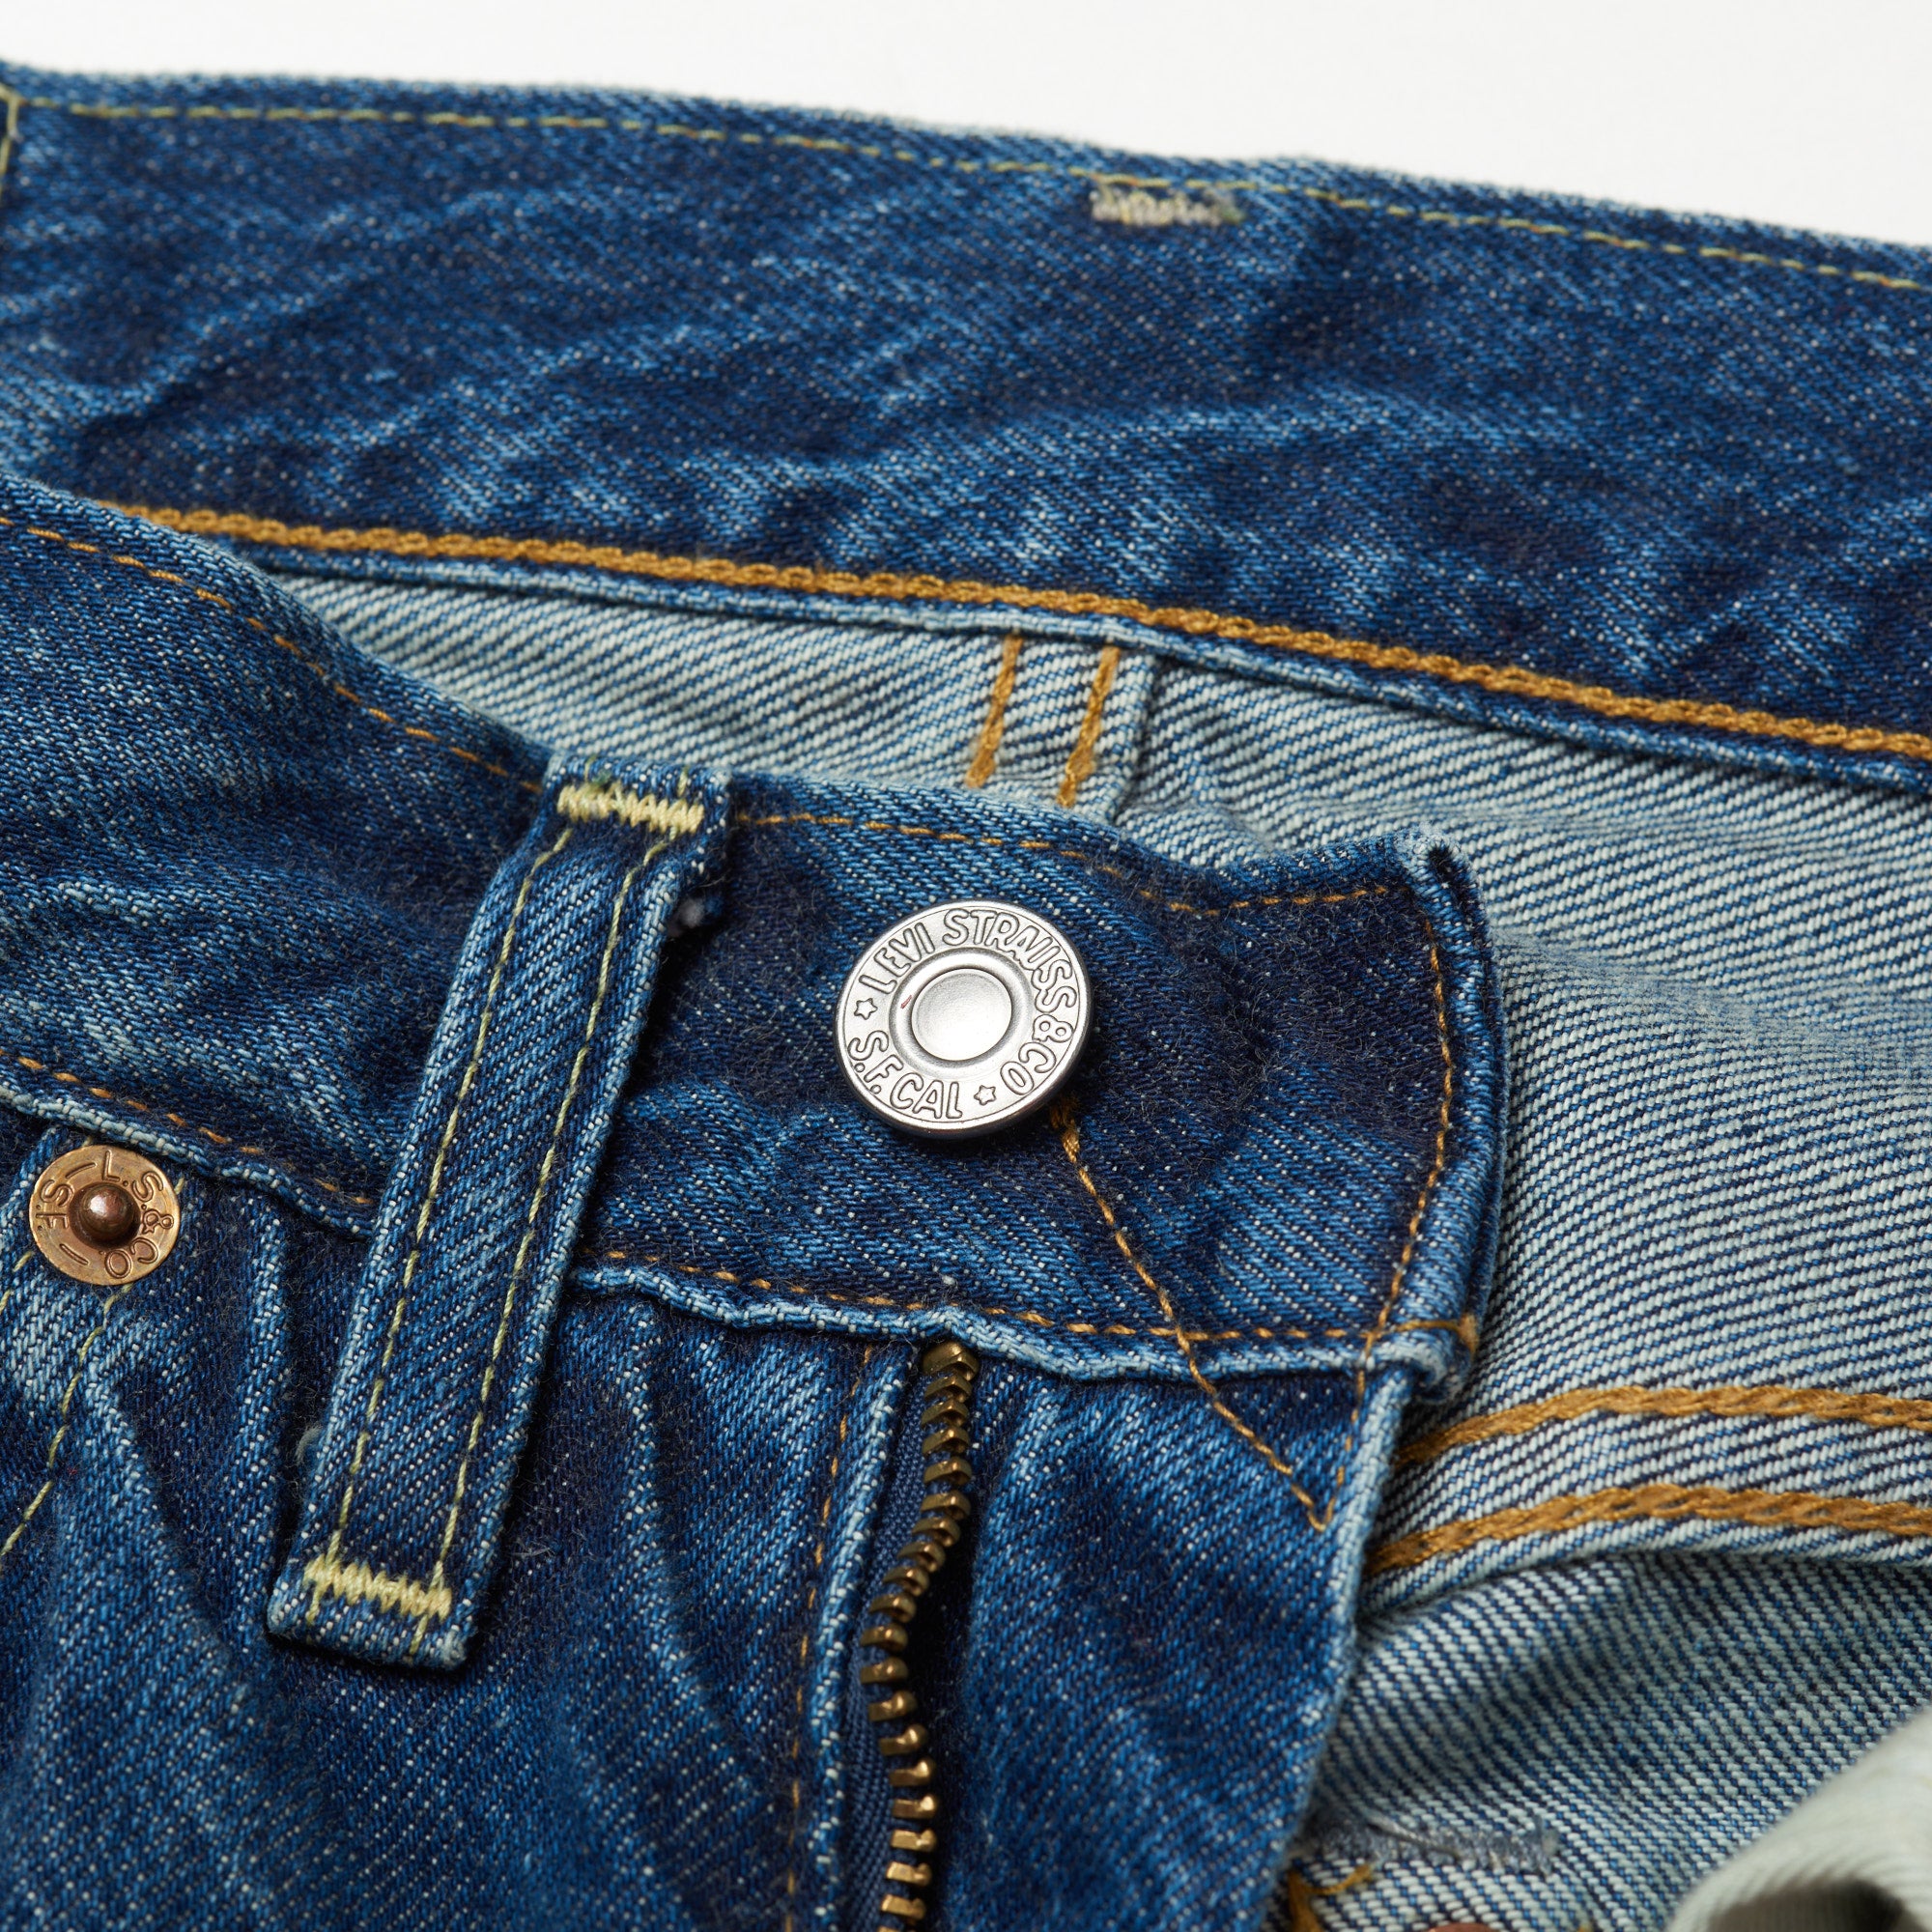 LEVI'S LVC Big E Vintage Clothing 501Z XX Denim Selvedge Jeans W26 L32 LEVI'S